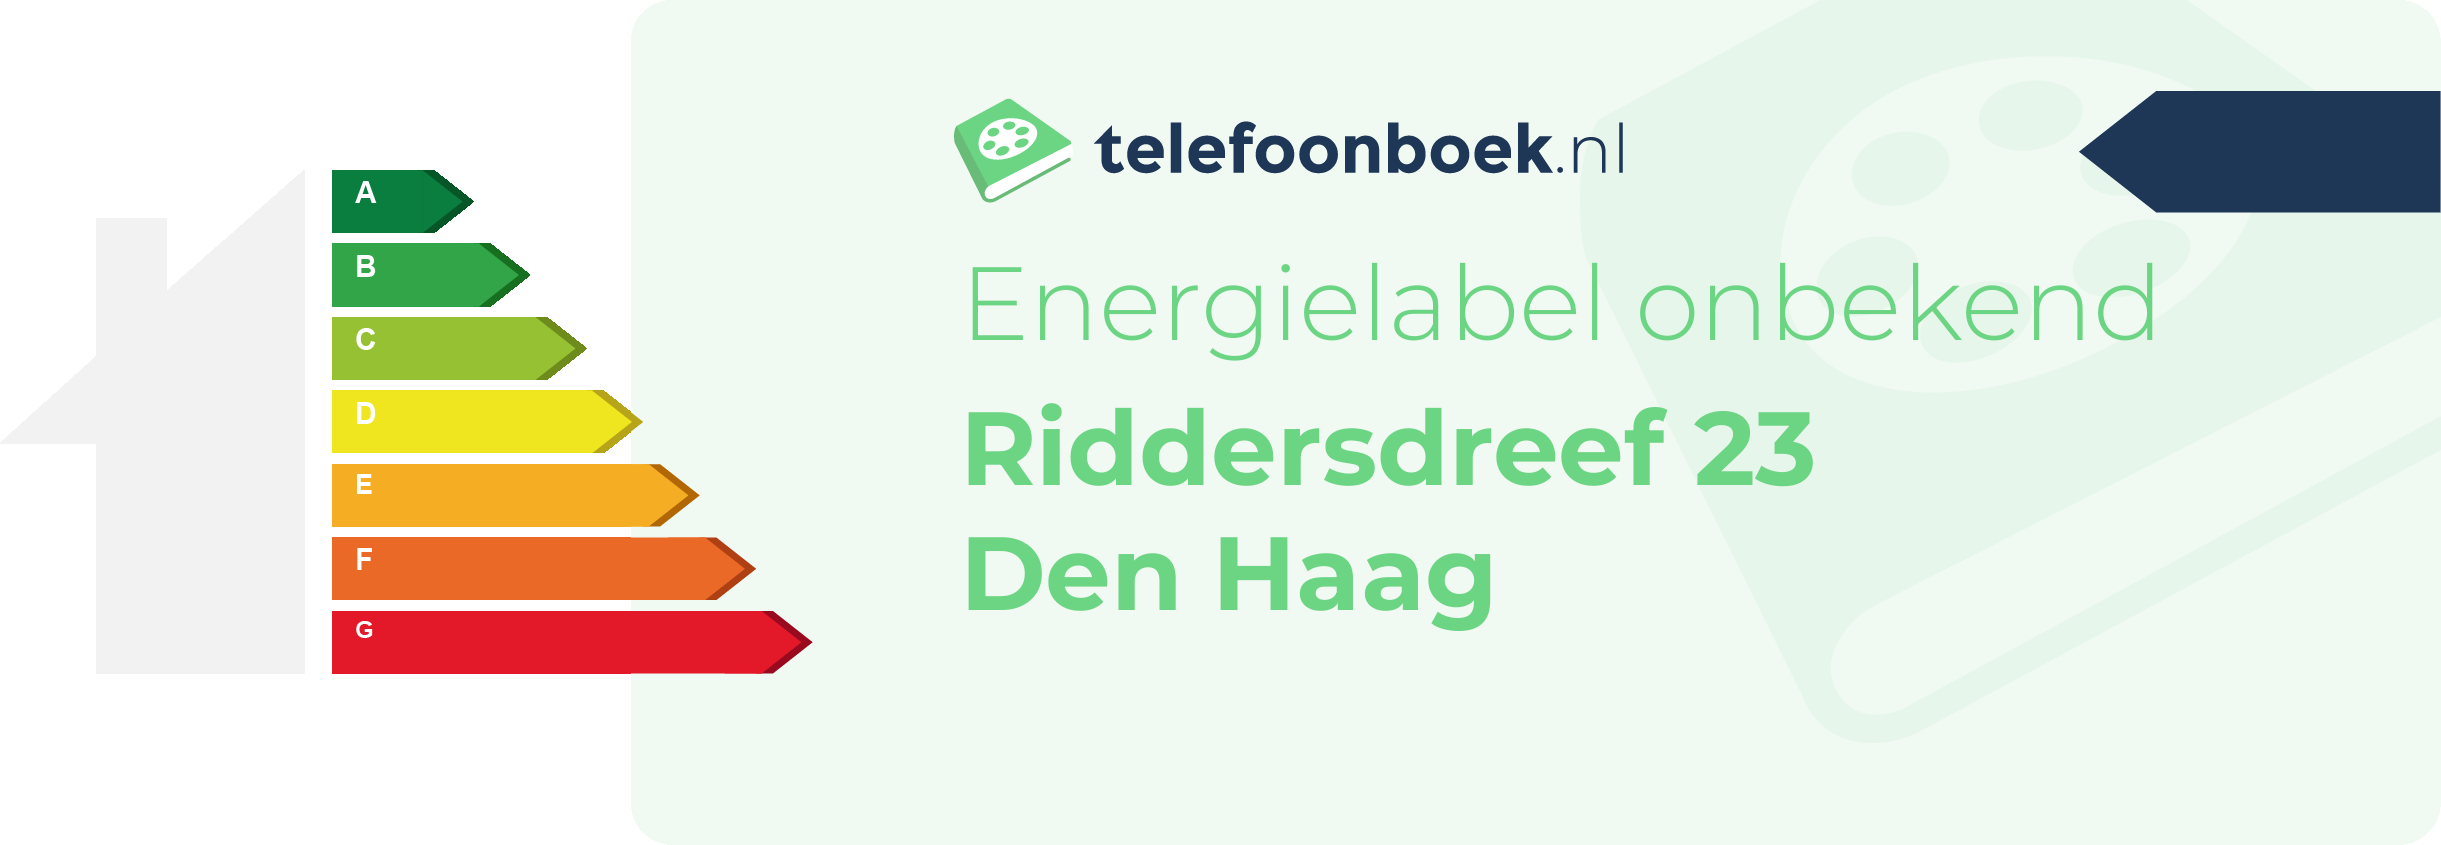 Energielabel Riddersdreef 23 Den Haag